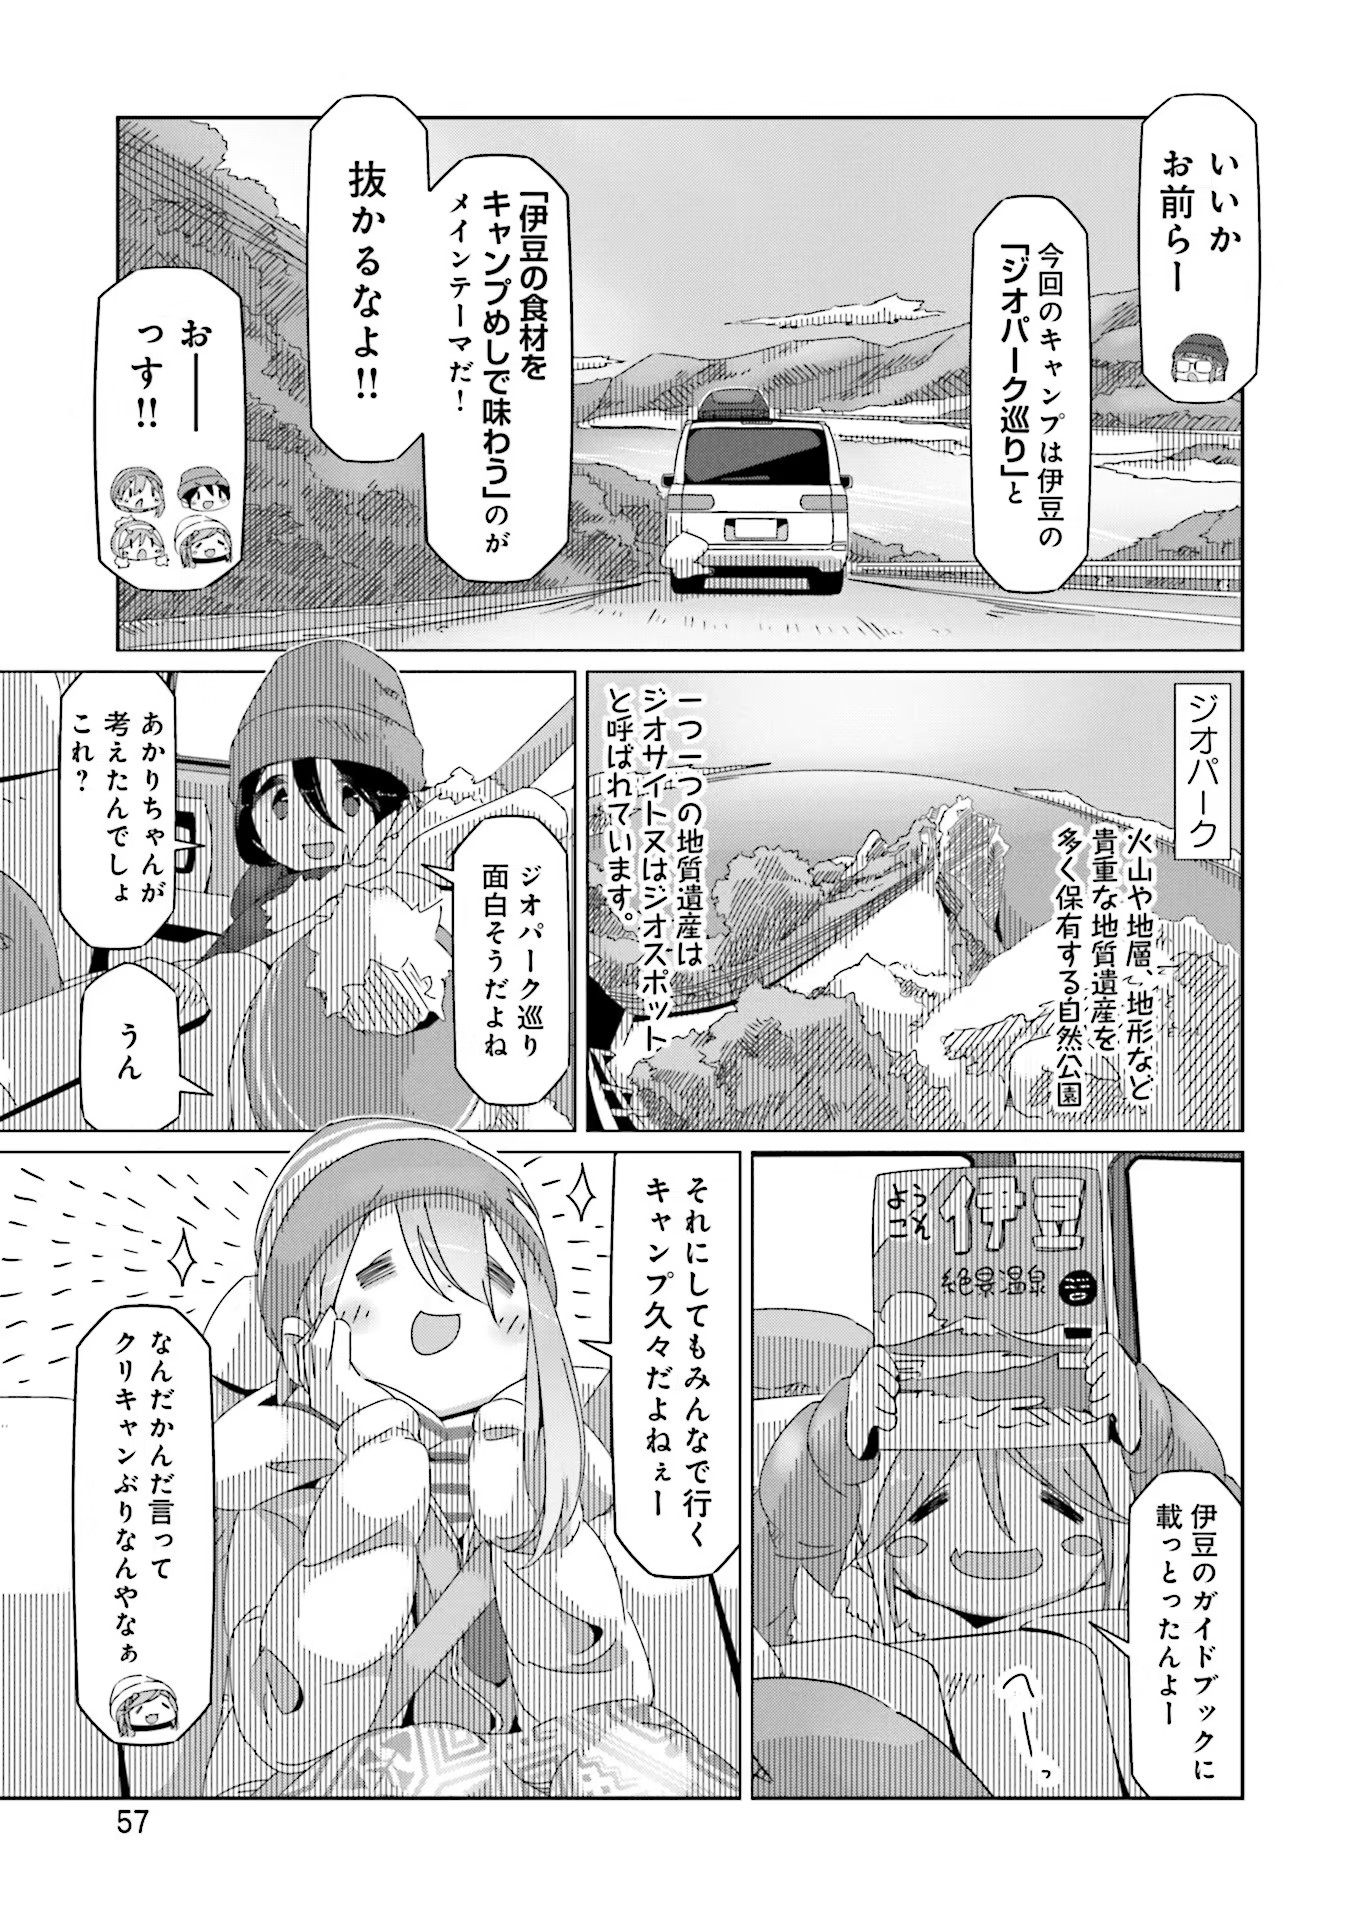 Yuru Camp - Chapter 43 - Page 3